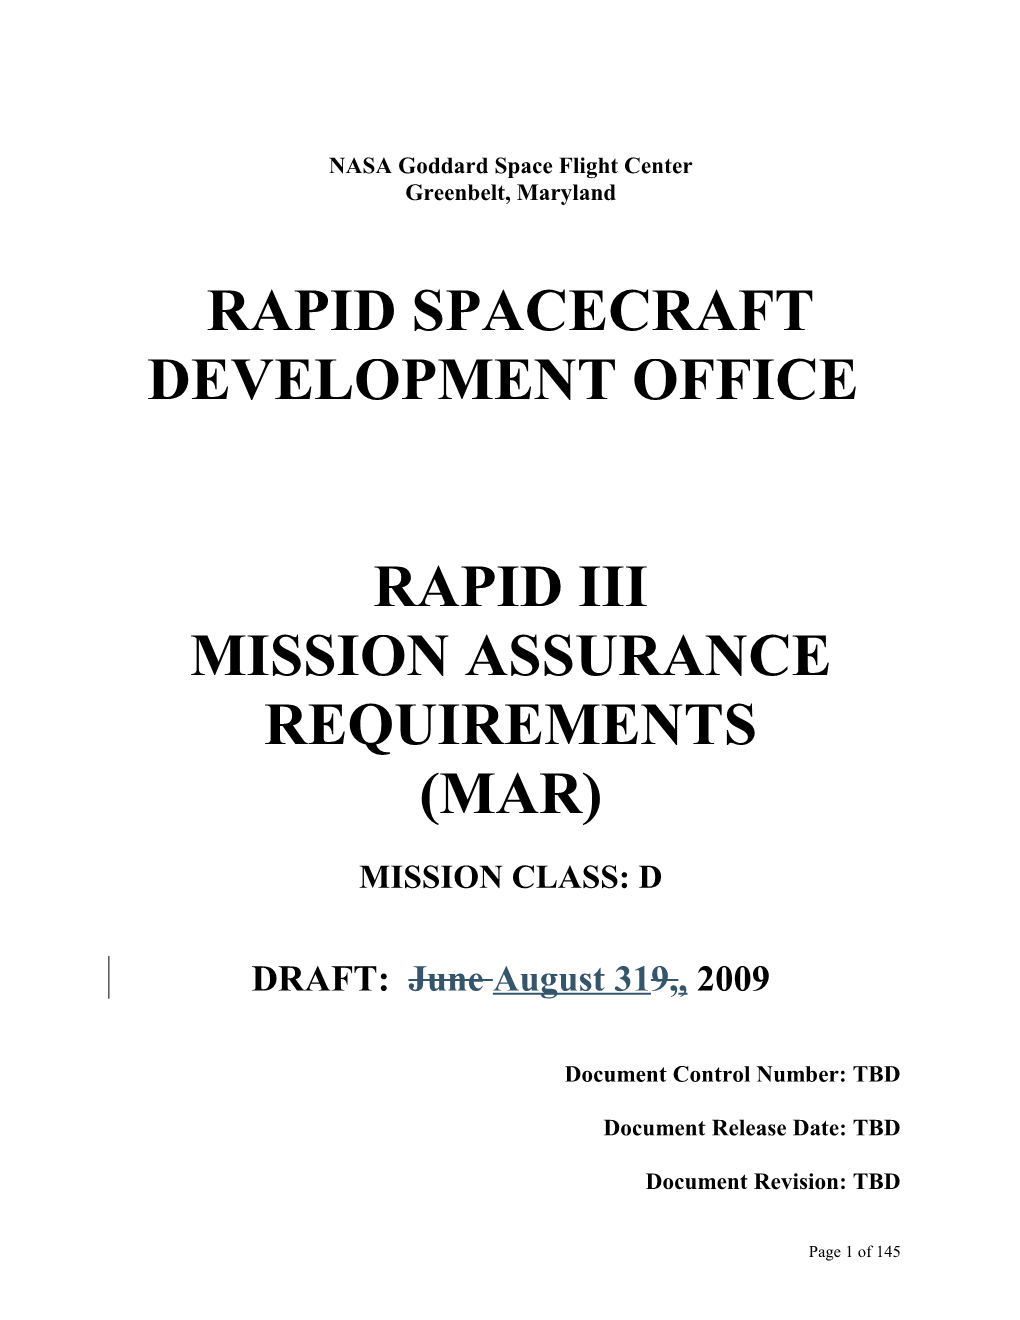 Rapid Spacecraft Development Office (Rsdo)